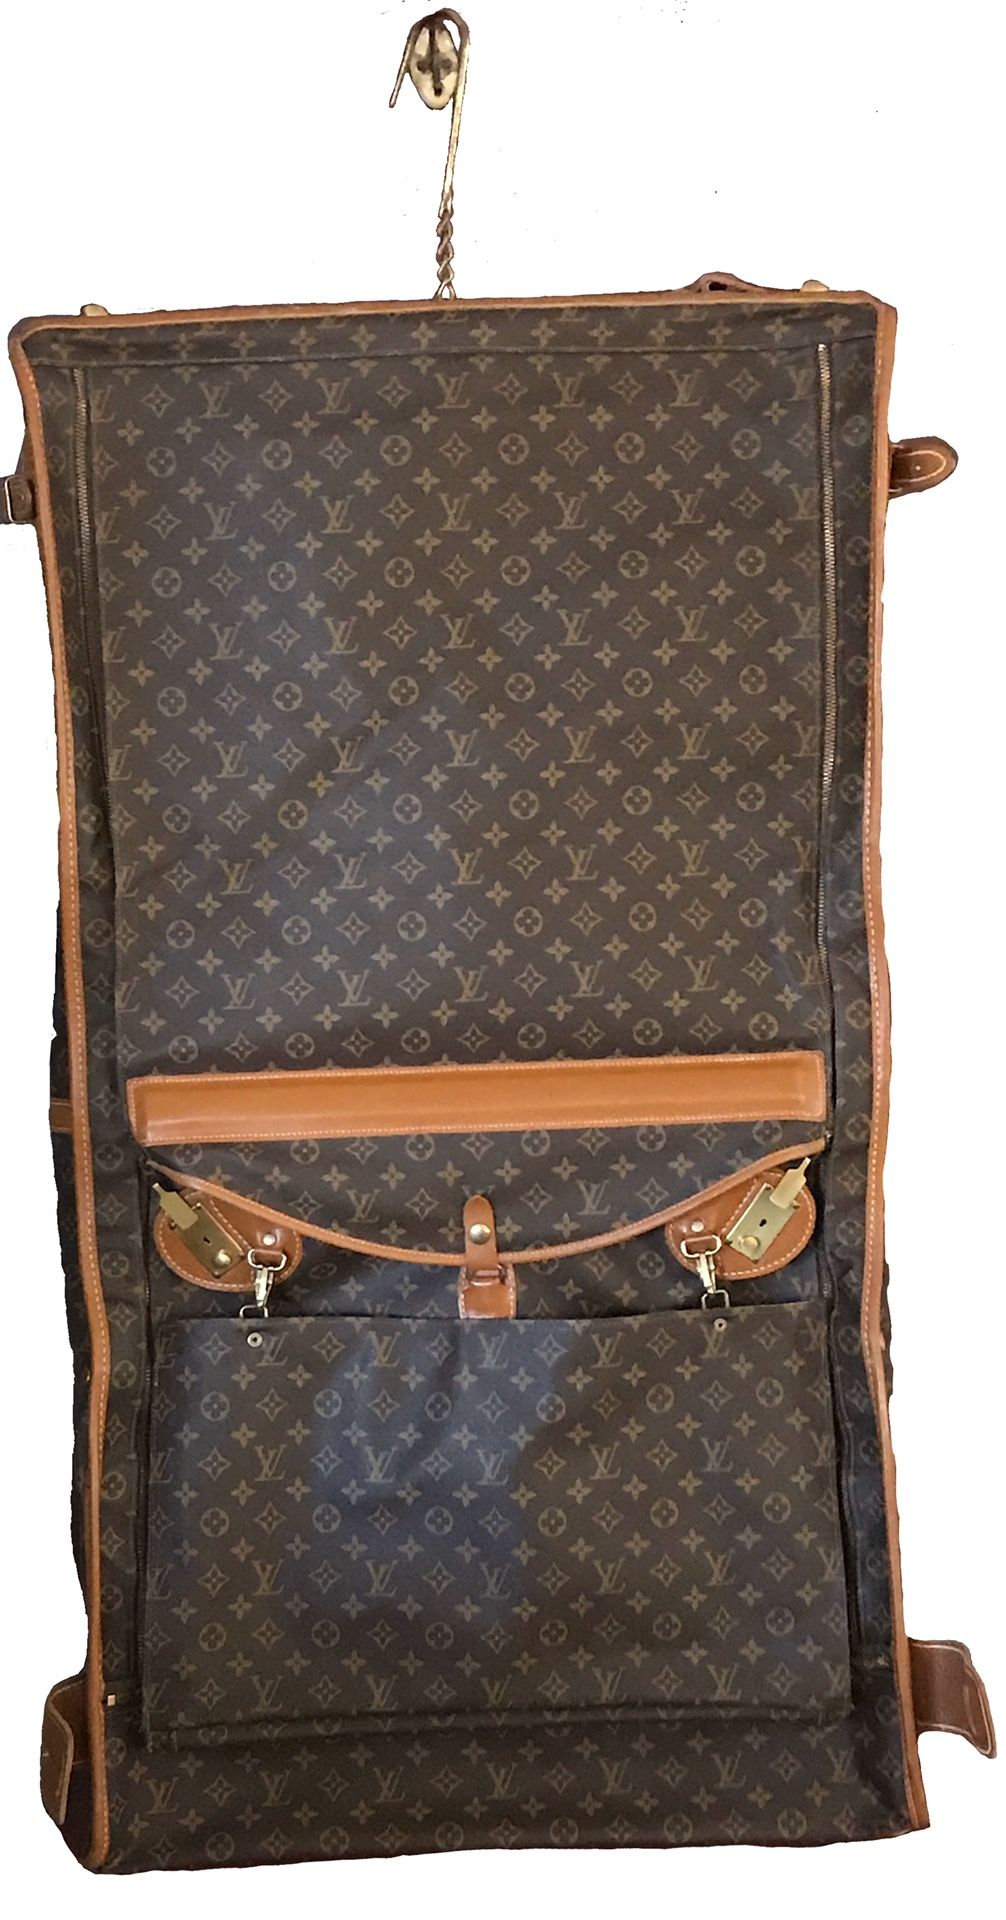 Louis Vuitton Large Vintage Garment Bag W/ Keys, 2 Extra Small Bags, & 5 Hangers